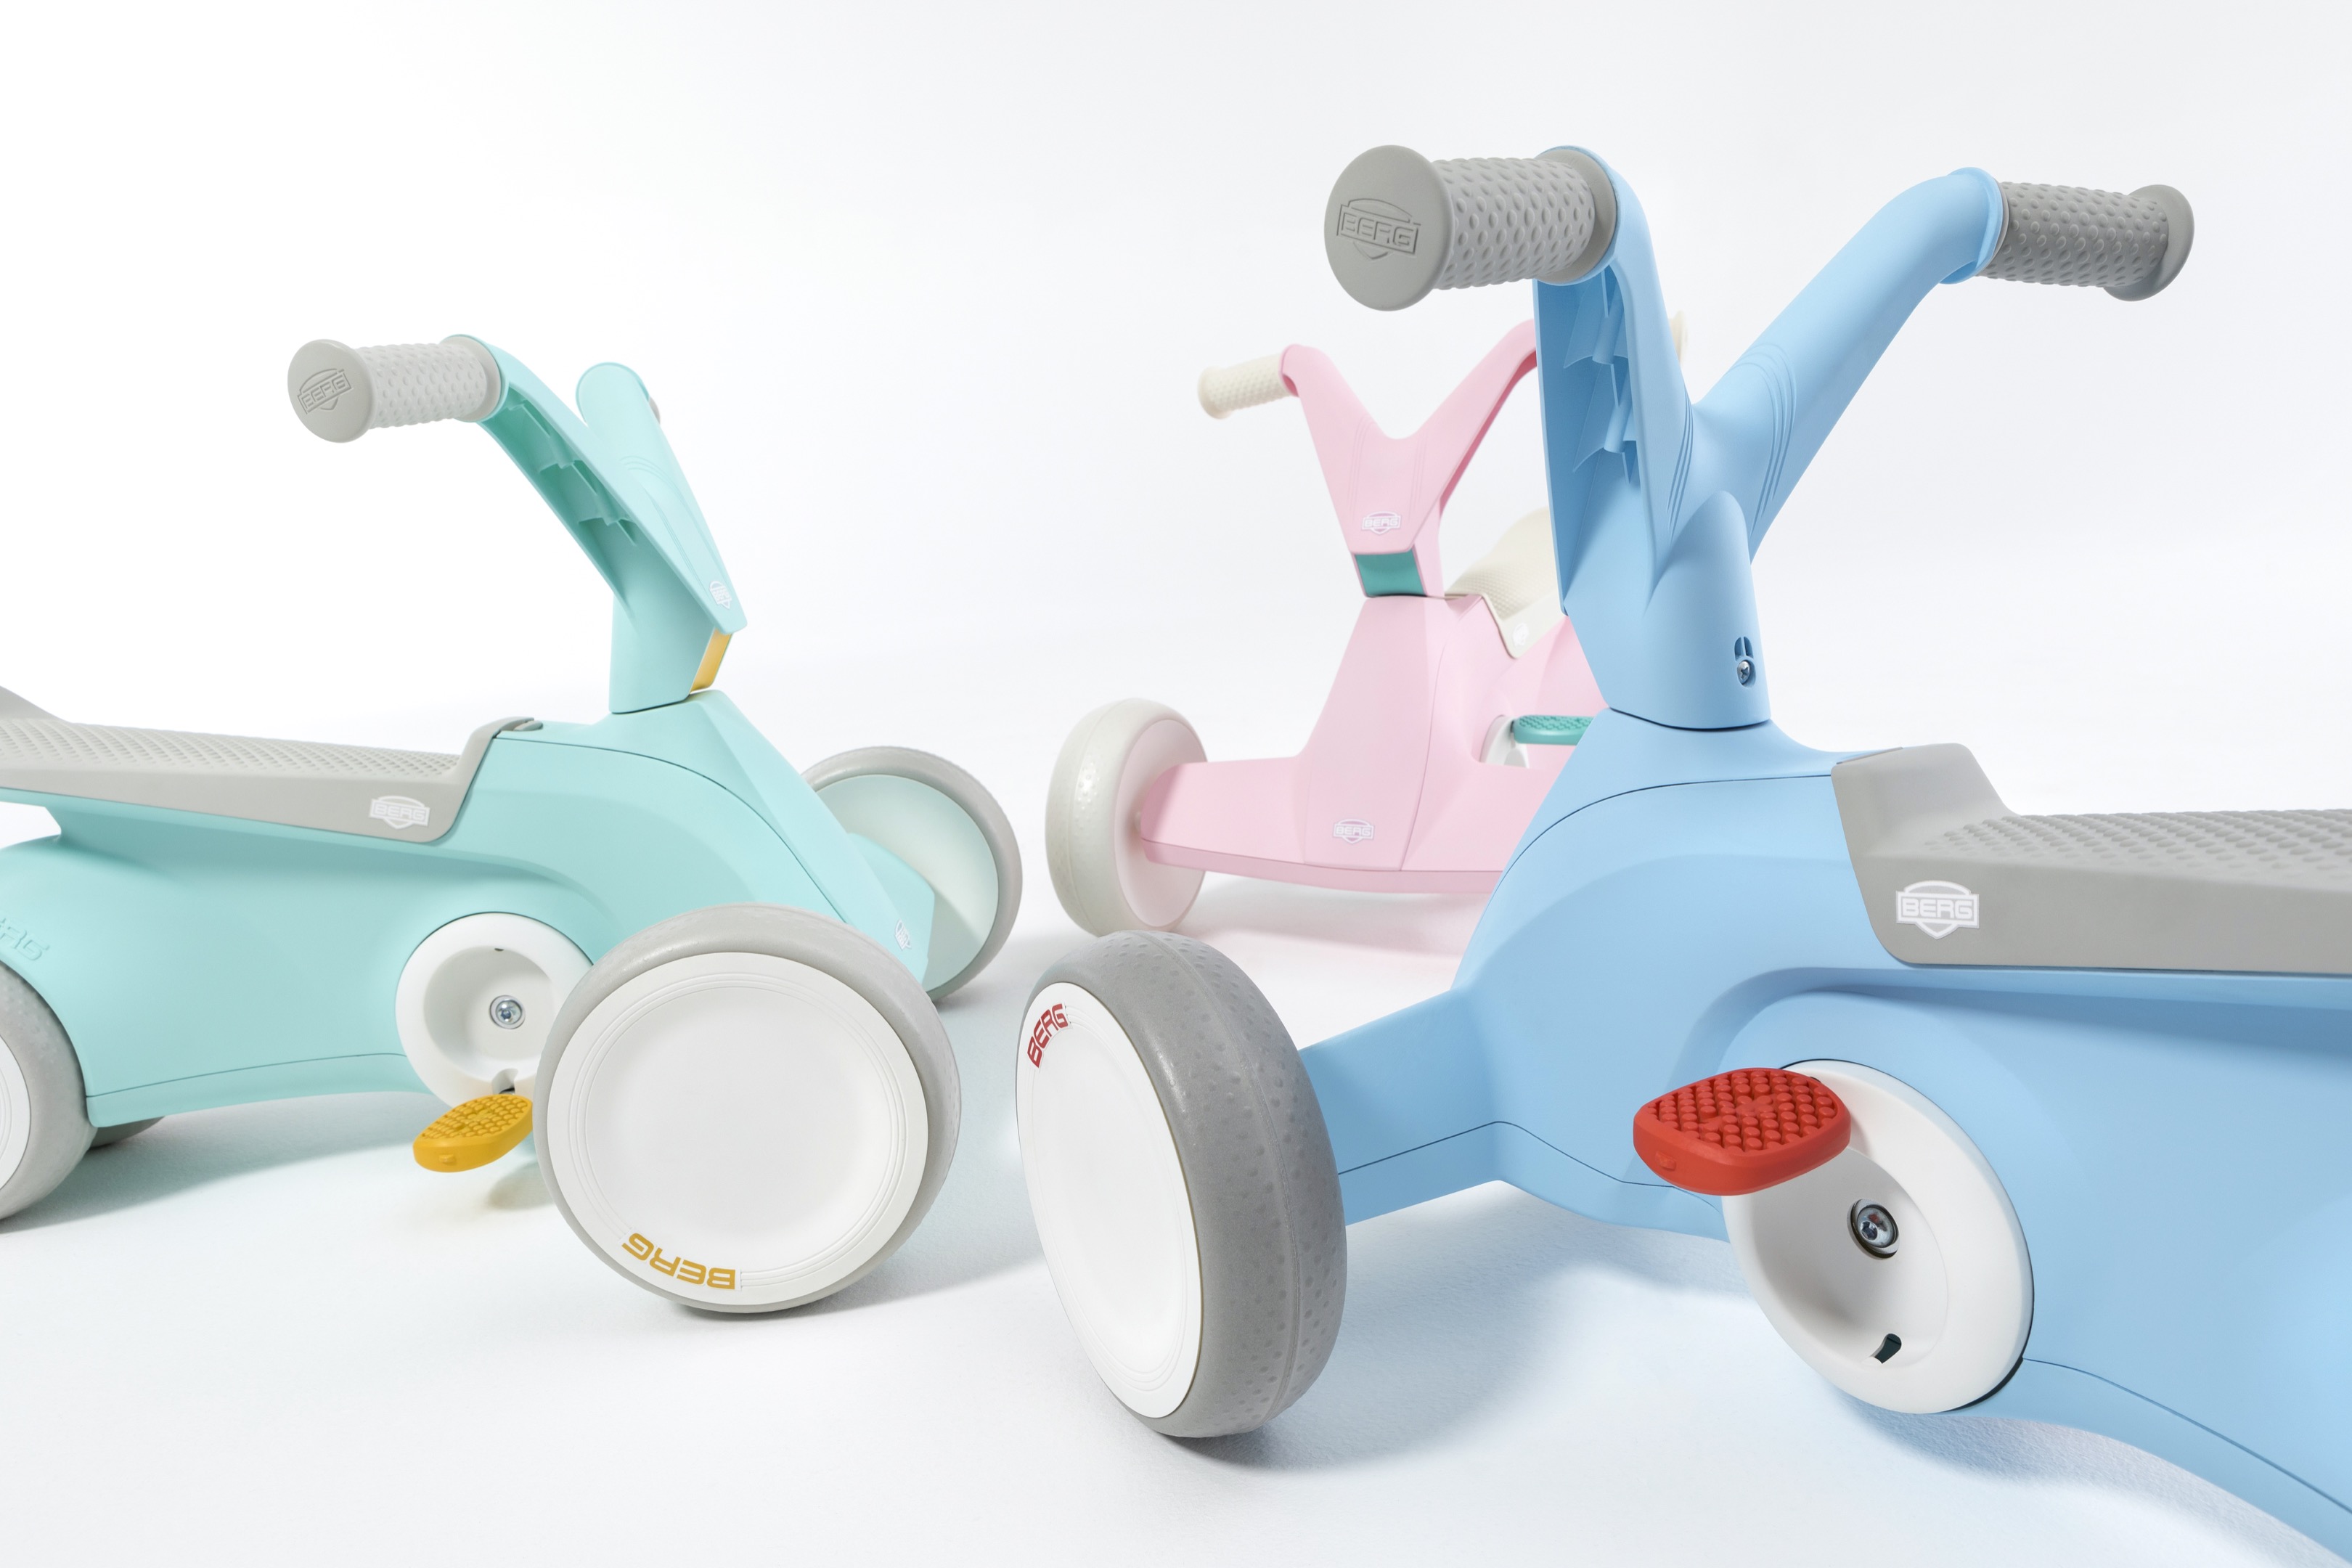 Jurjen Poeles fotografie Berg Toys lifestyle go2 pedal cart pedalcart skelter kinder speelgoed kind interieur productfotografie product locatie studio